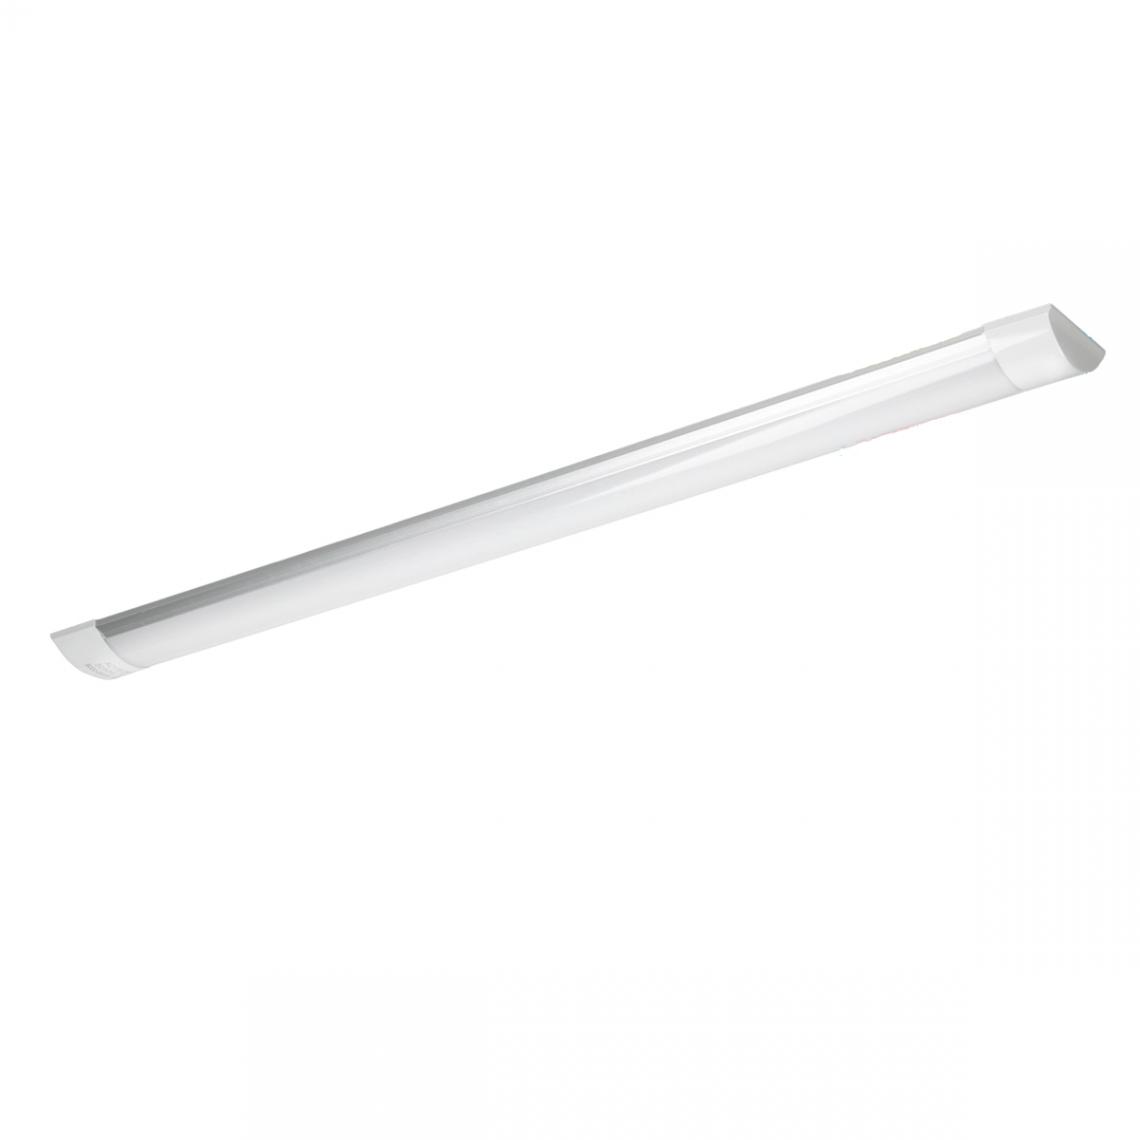 Ecd Germany - Set 4x LED batten tube 28W 90cm blanc froid surface luminaire slim barre plafond - Tubes et néons